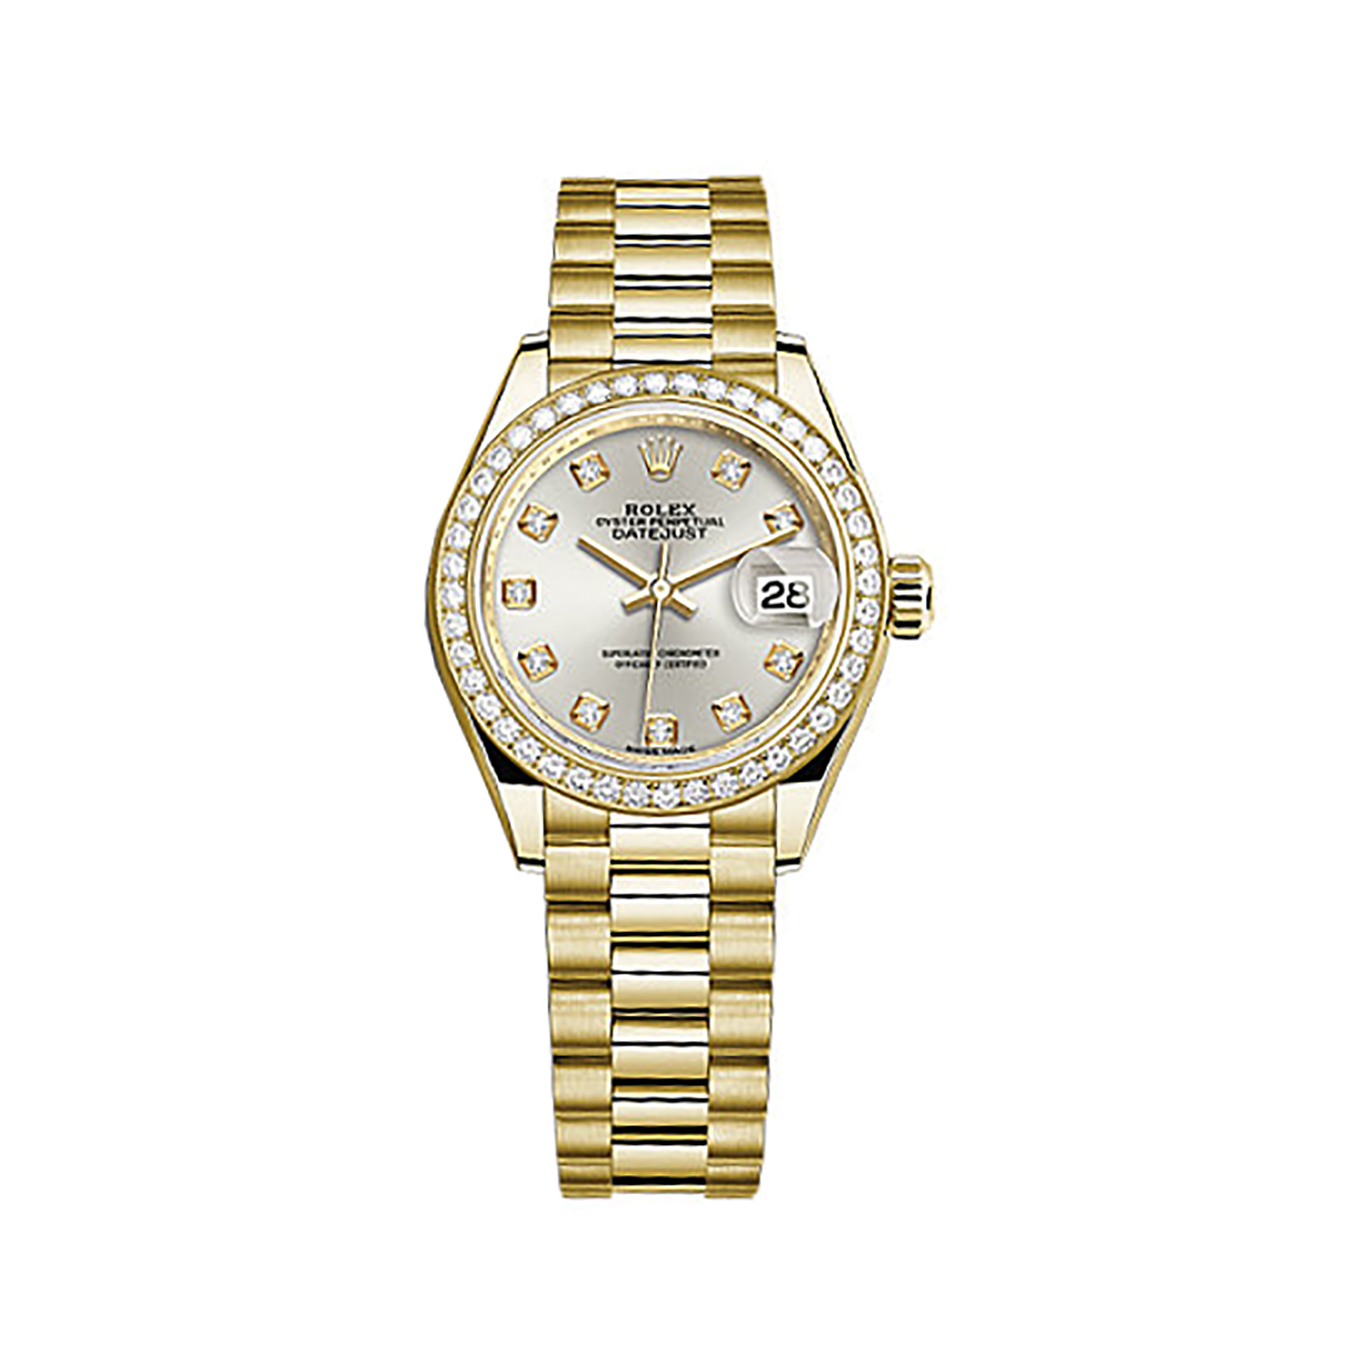 Lady-Datejust 28 279138RBR Gold & Diamonds Watch (Silver Set with Diamonds)